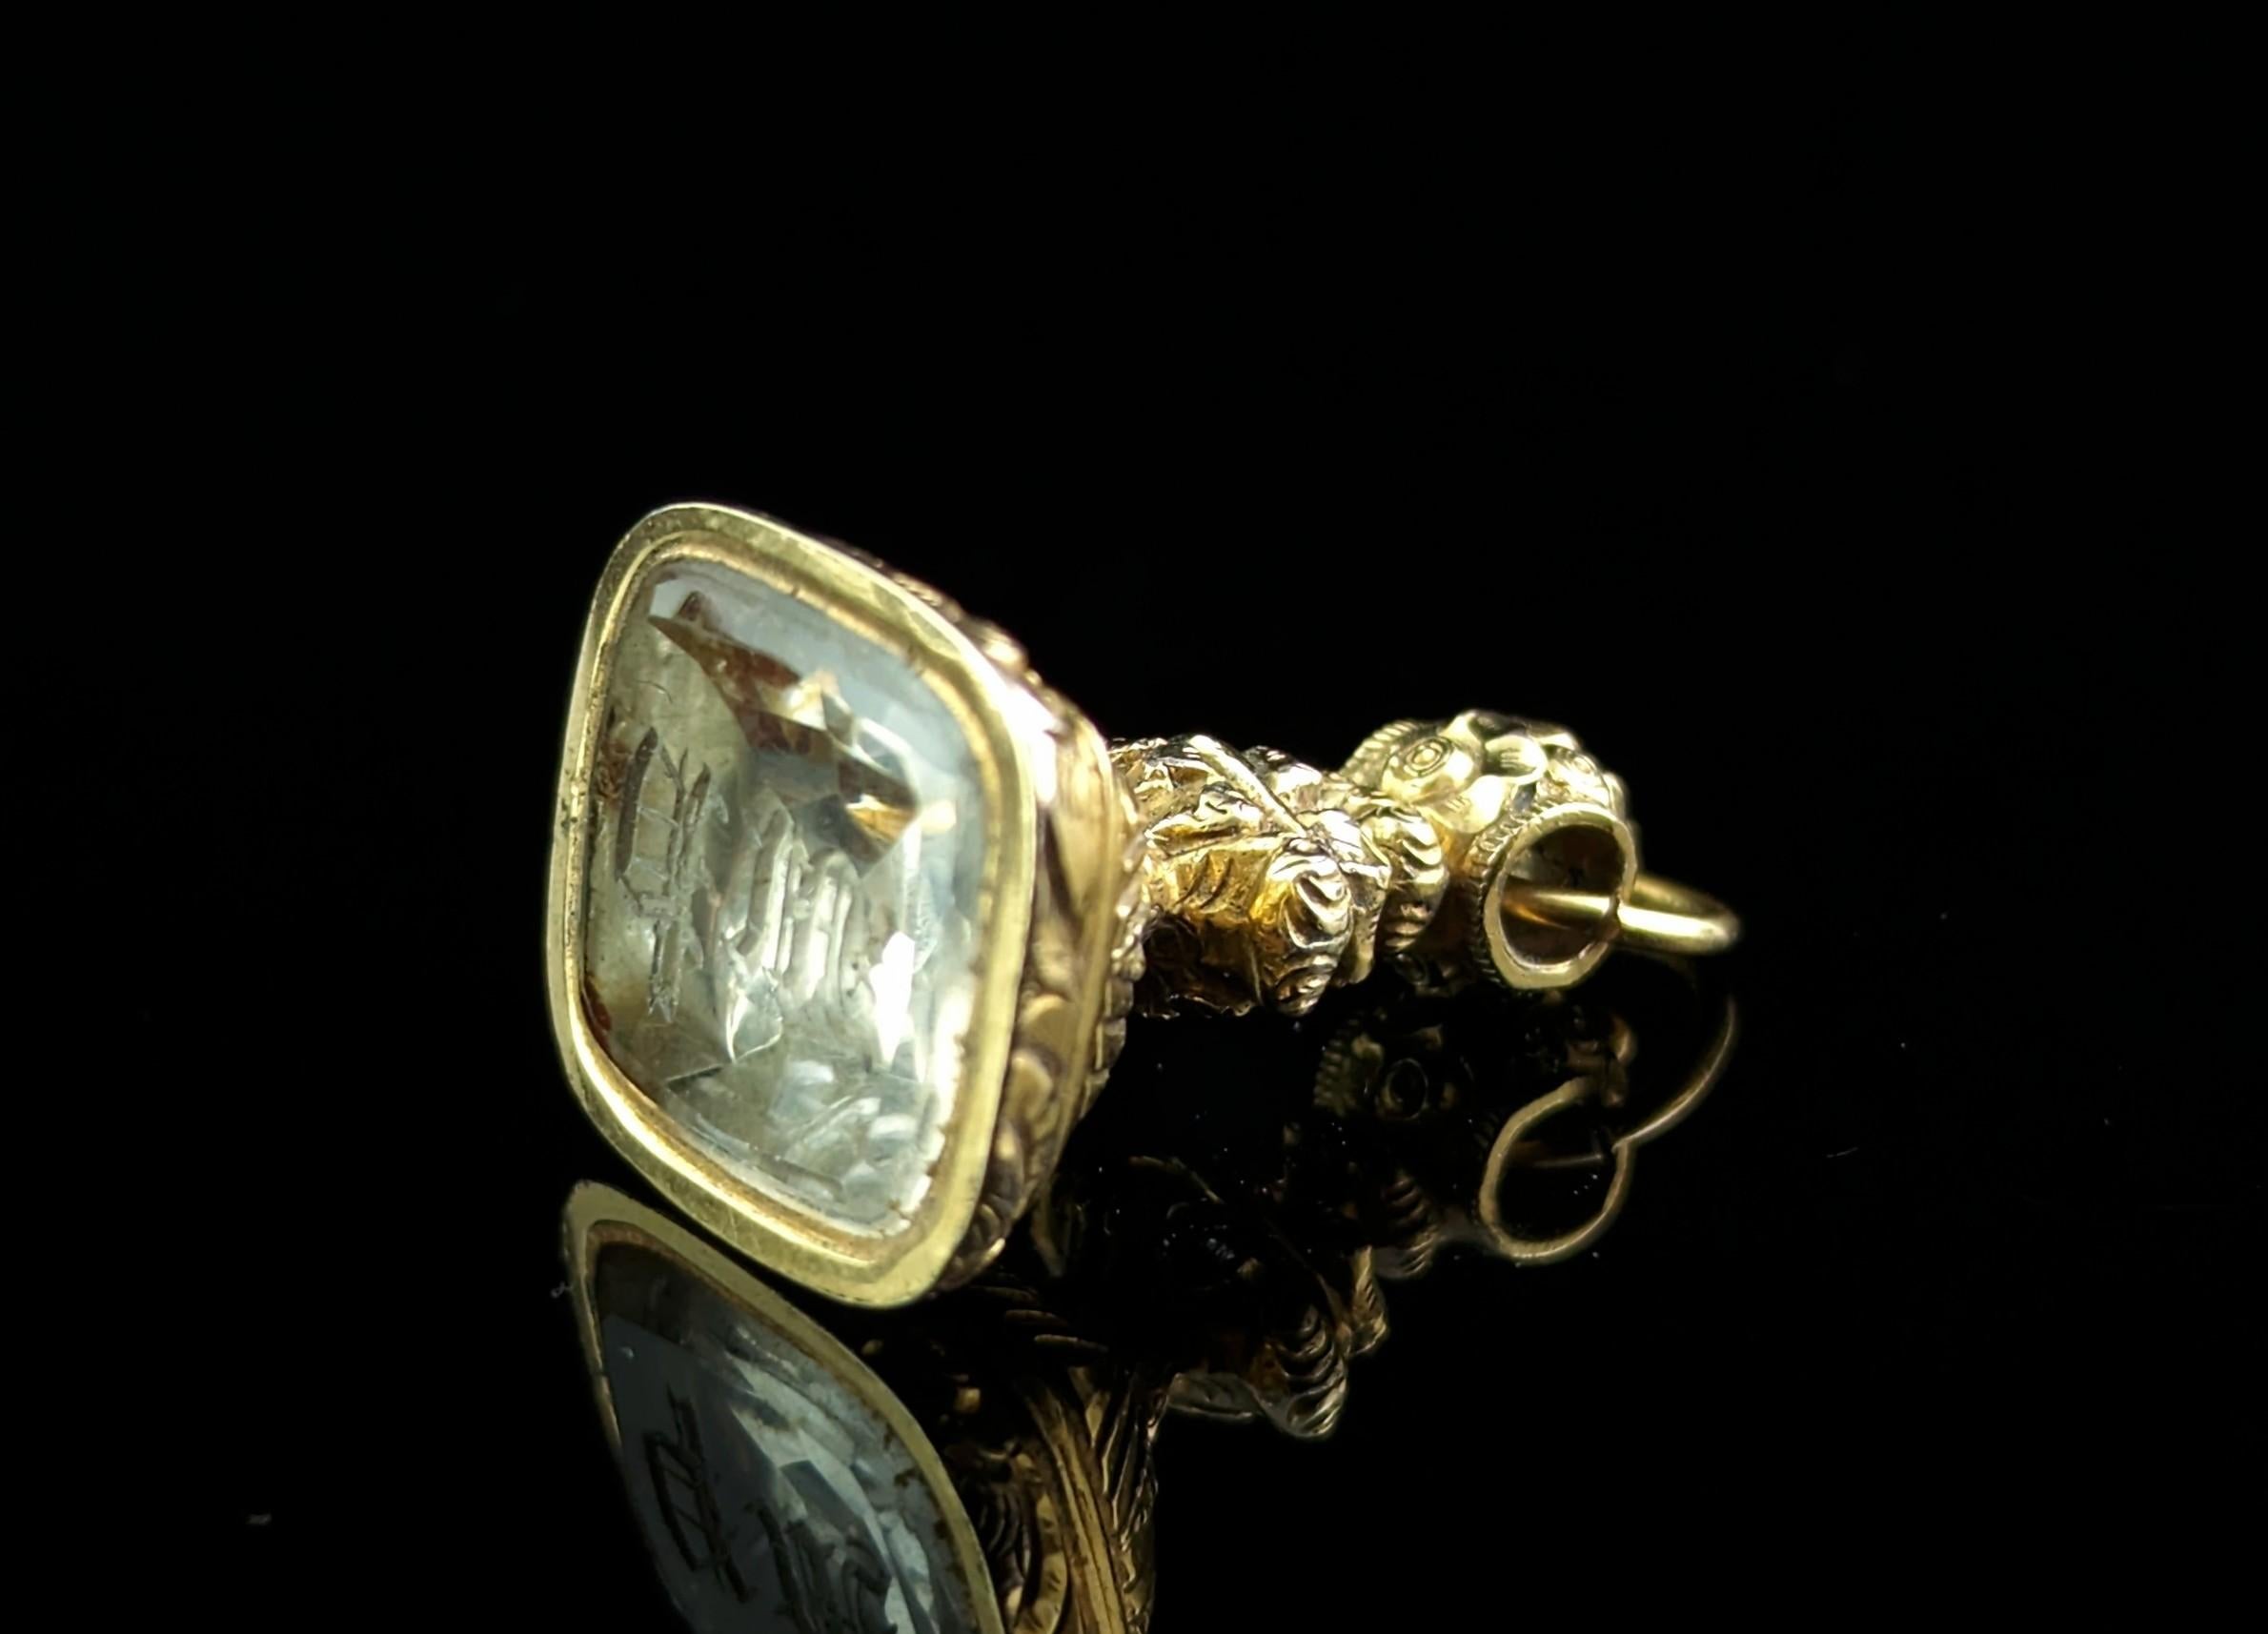 Antique Victorian 9k gold cased seal fob pendant, Quartz, MP initials  5